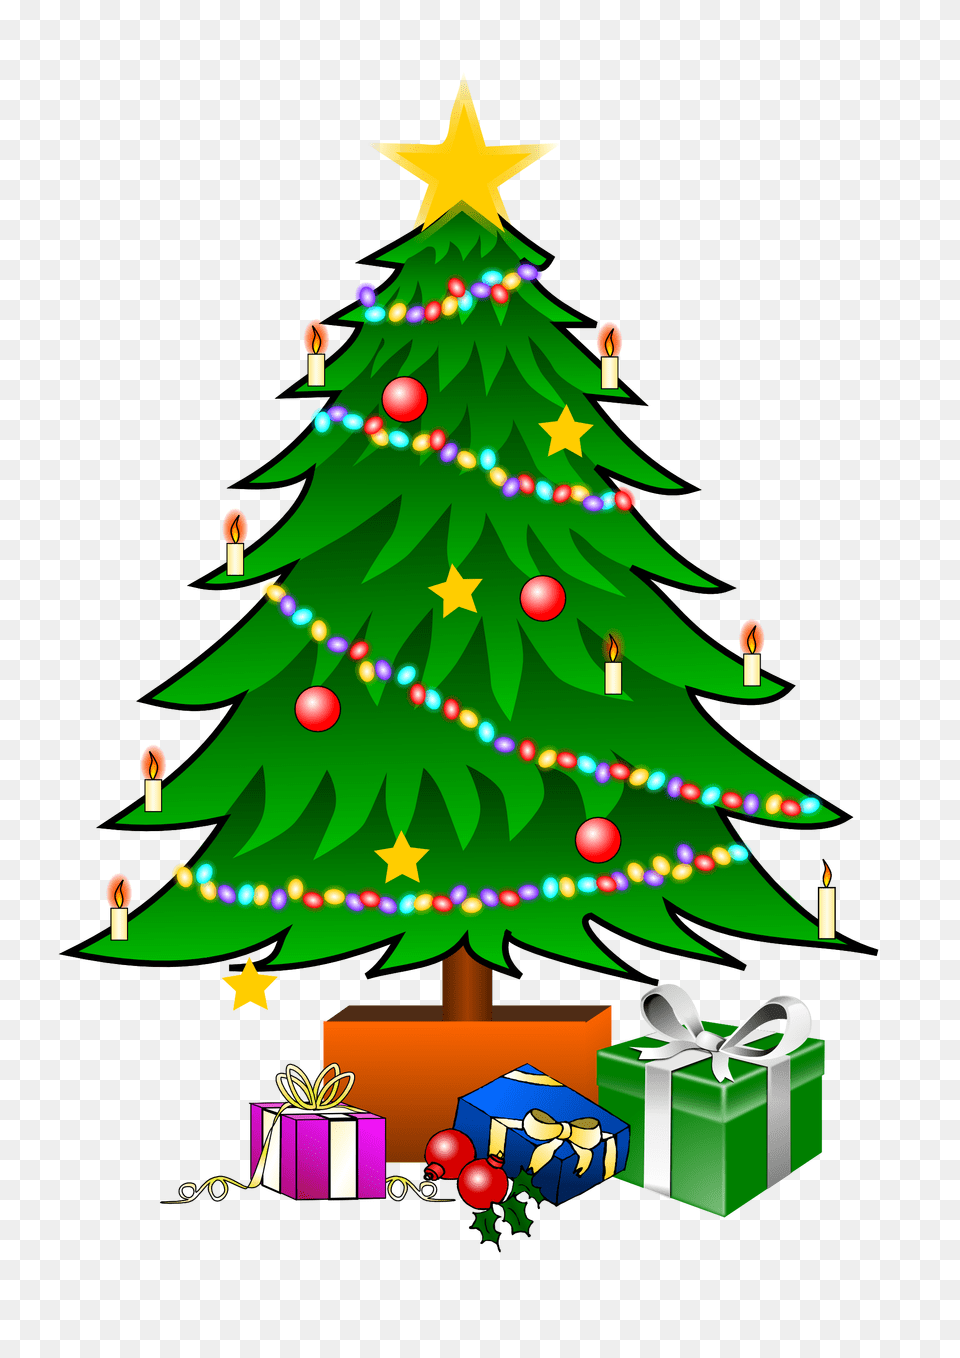 Clipart Christmas Tree Theme, Plant, Christmas Decorations, Festival, Christmas Tree Png Image